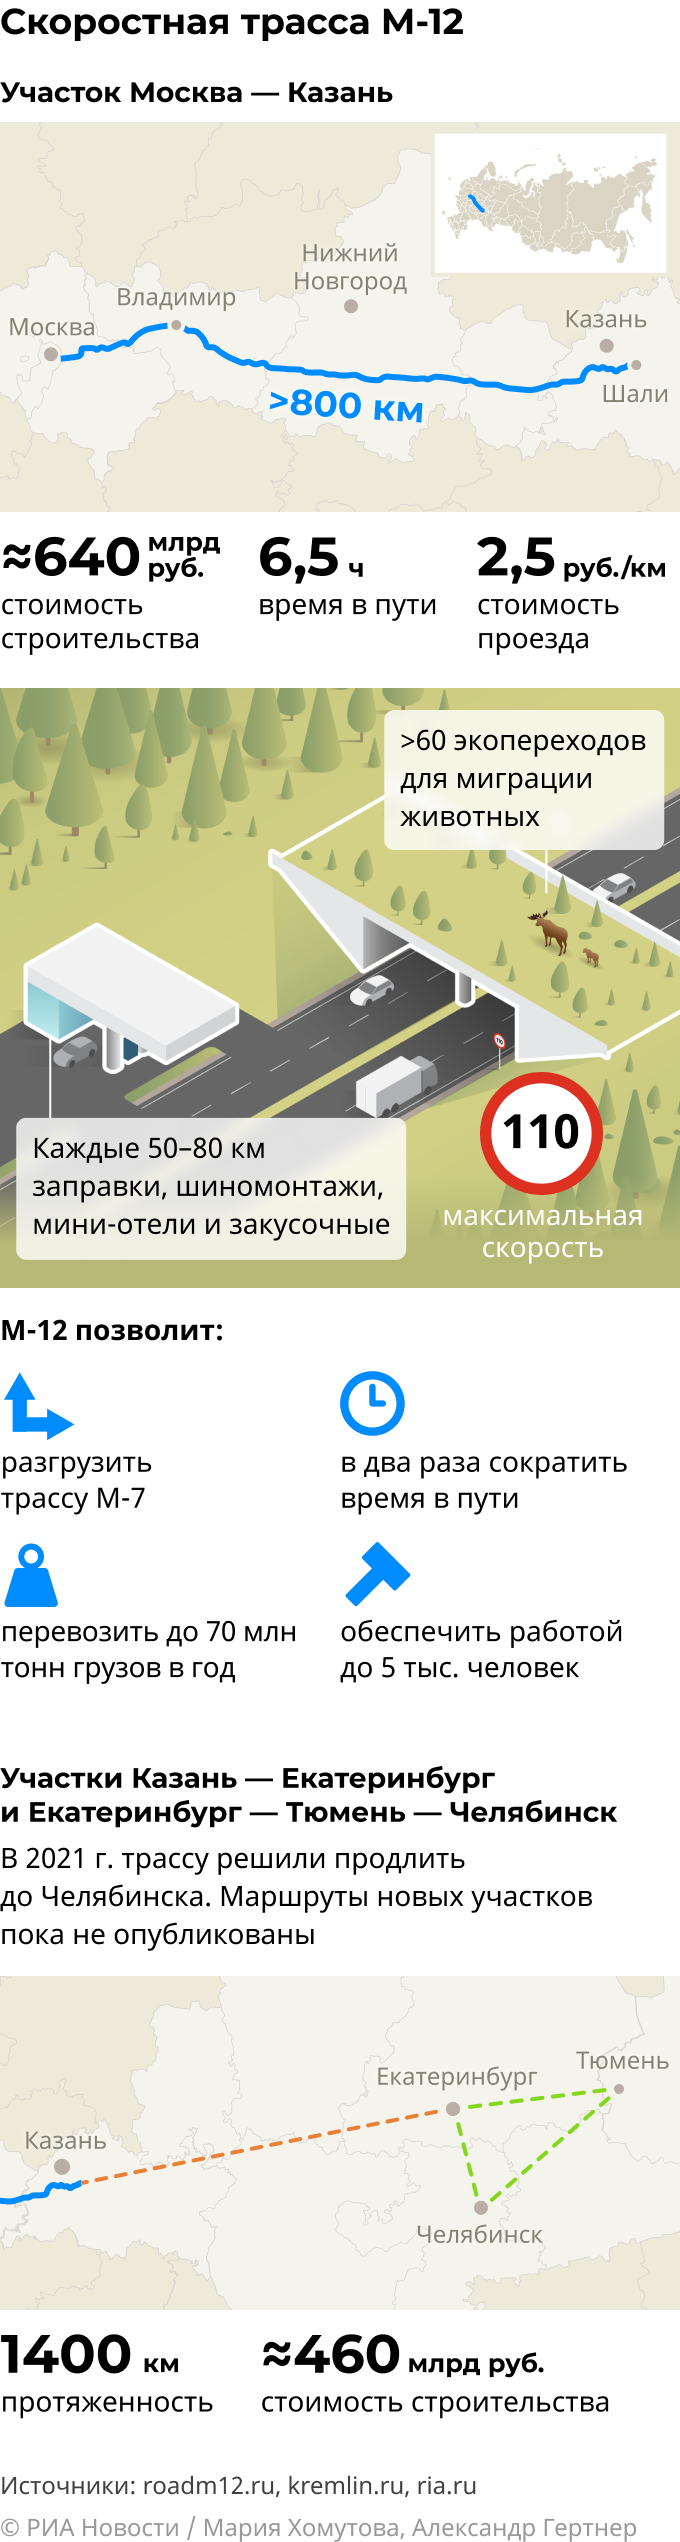 Трасса М-12 Москва — Казань: маршрут и основные характеристики mob